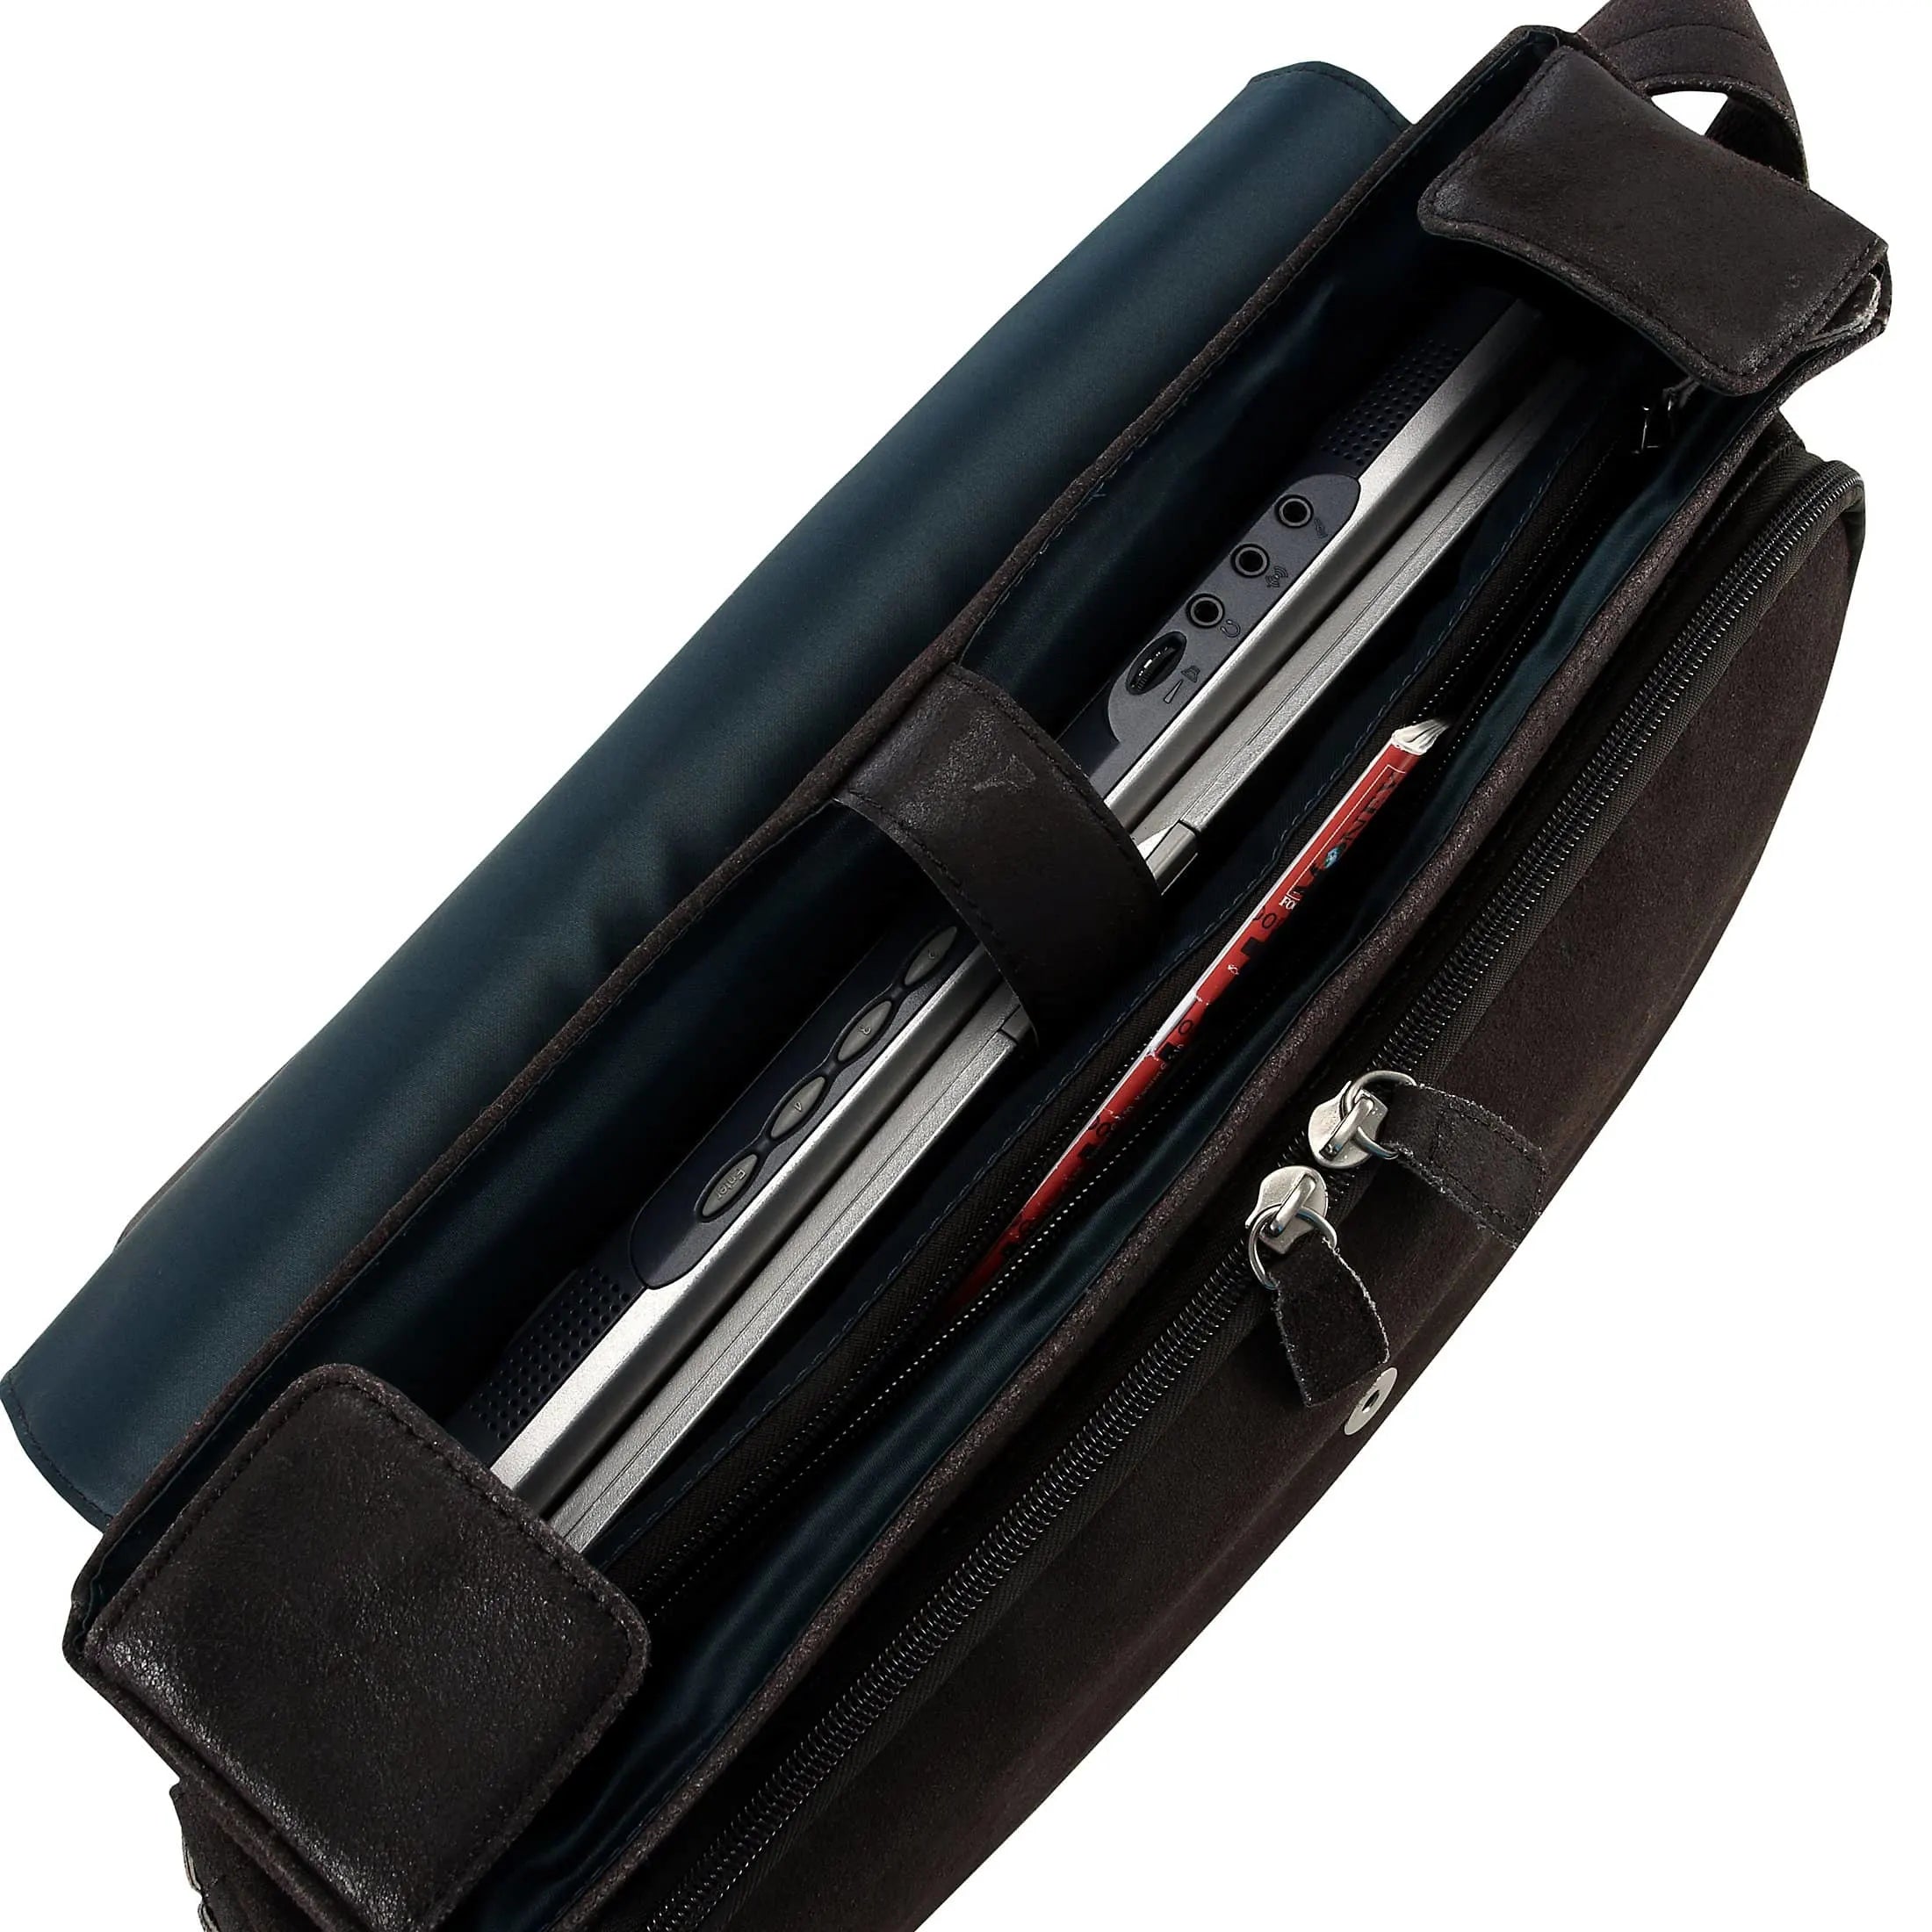 Plevier 30 series messenger bag with laptop compartment 37 cm - brown